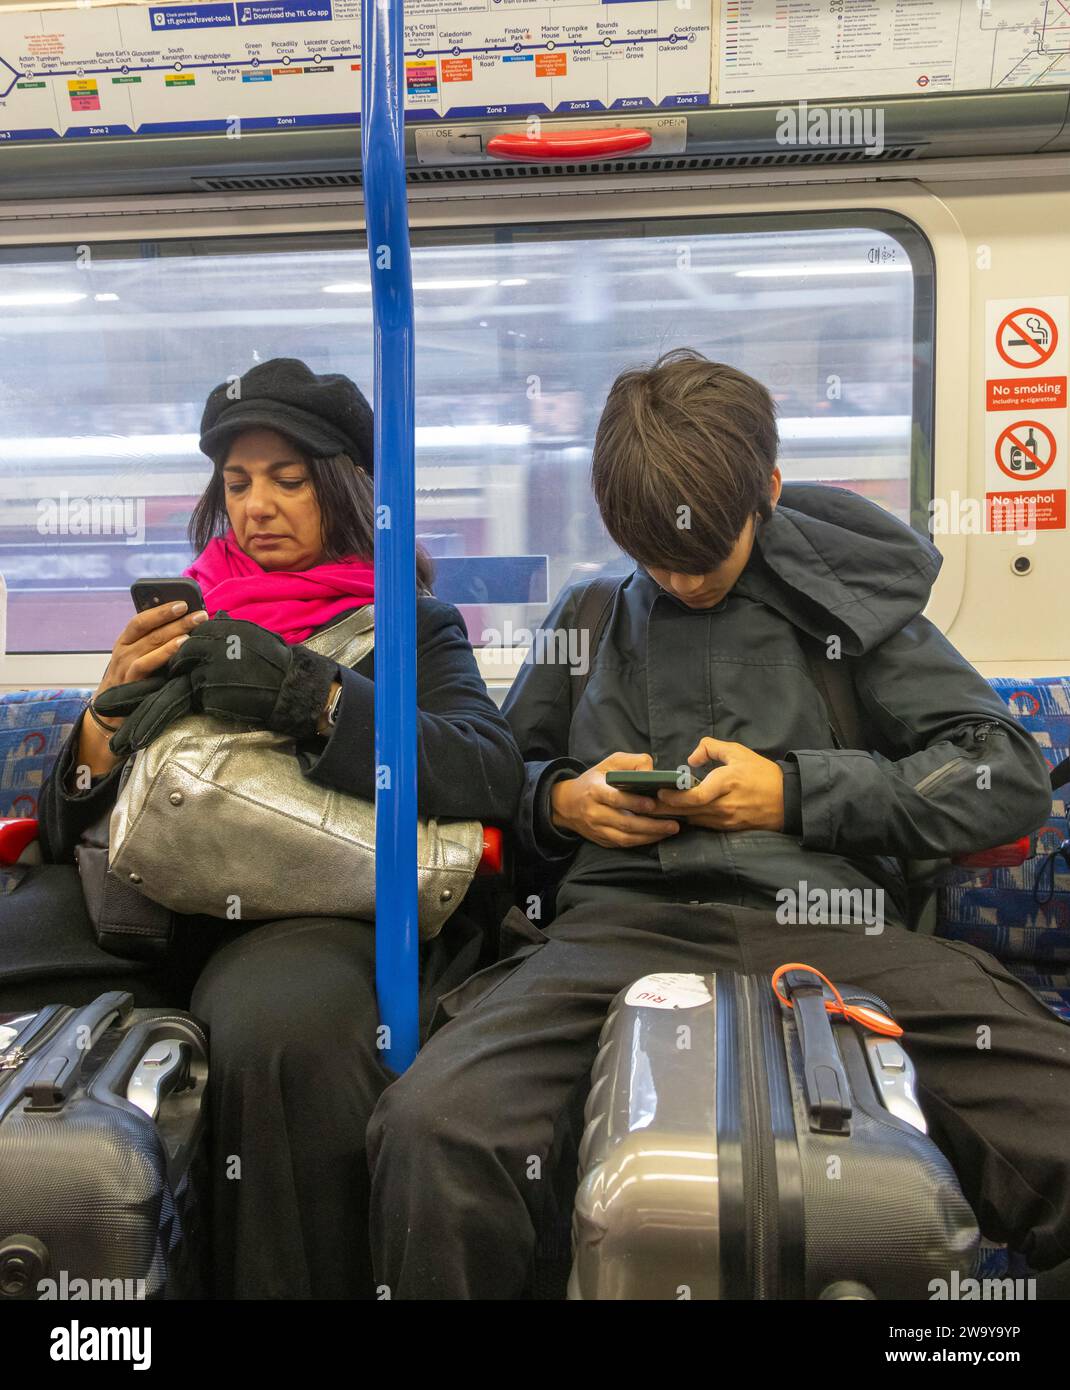 passengers on London underground train Stock Photo